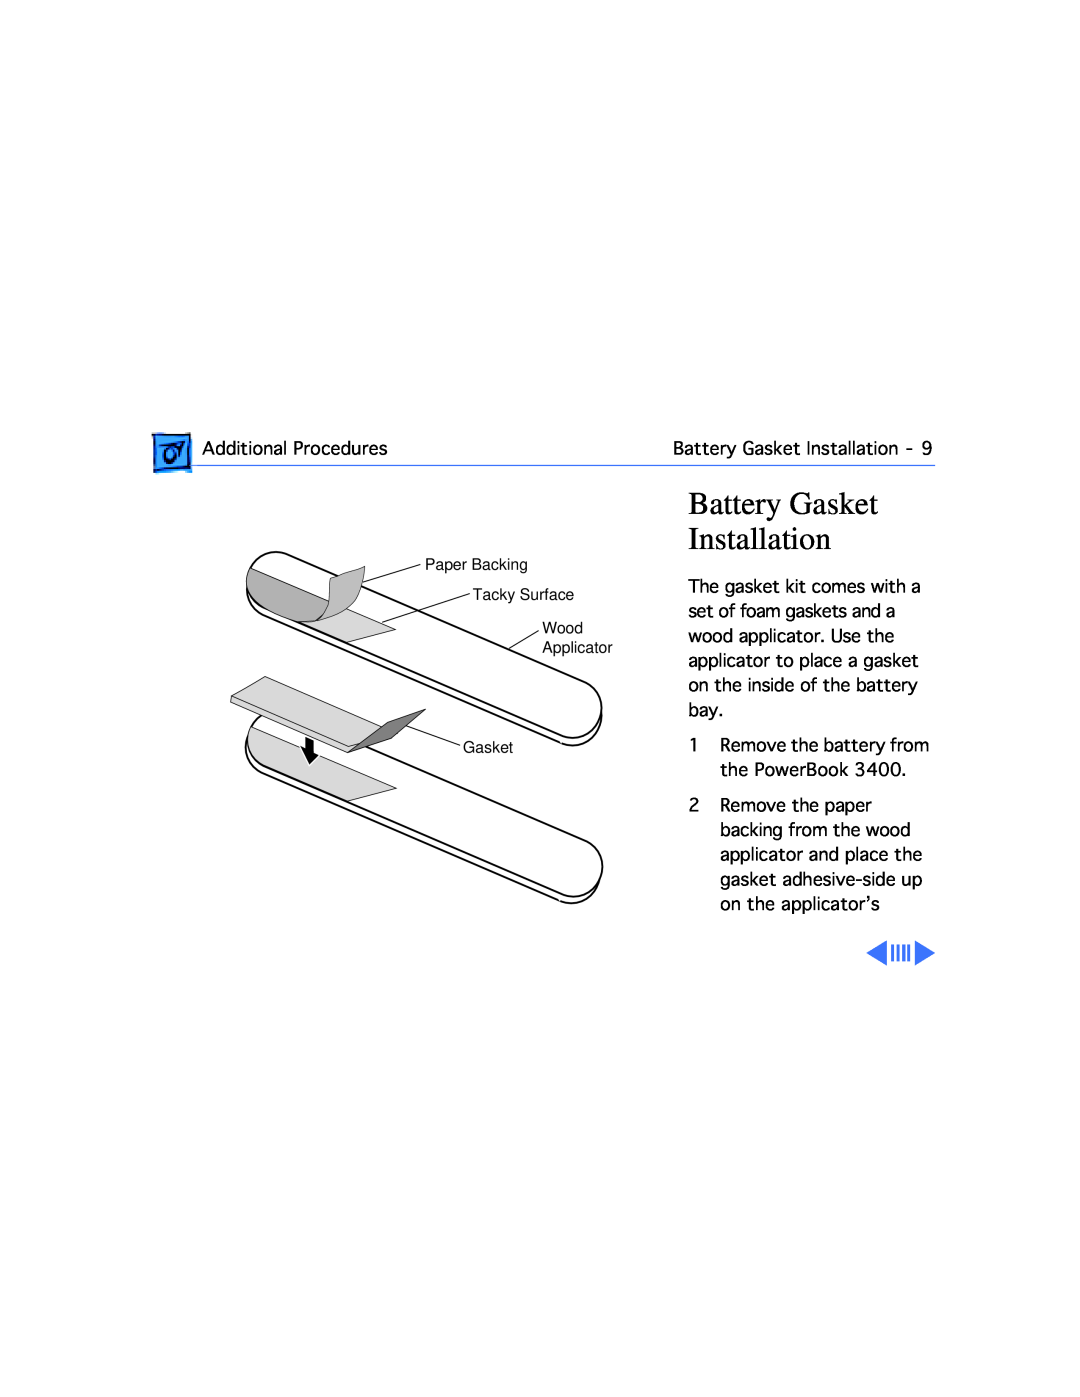 Apple G3, 3400C/200 manual Battery Gasket Installation, Paper Backing Tacky Surface Wood Applicator Gasket 